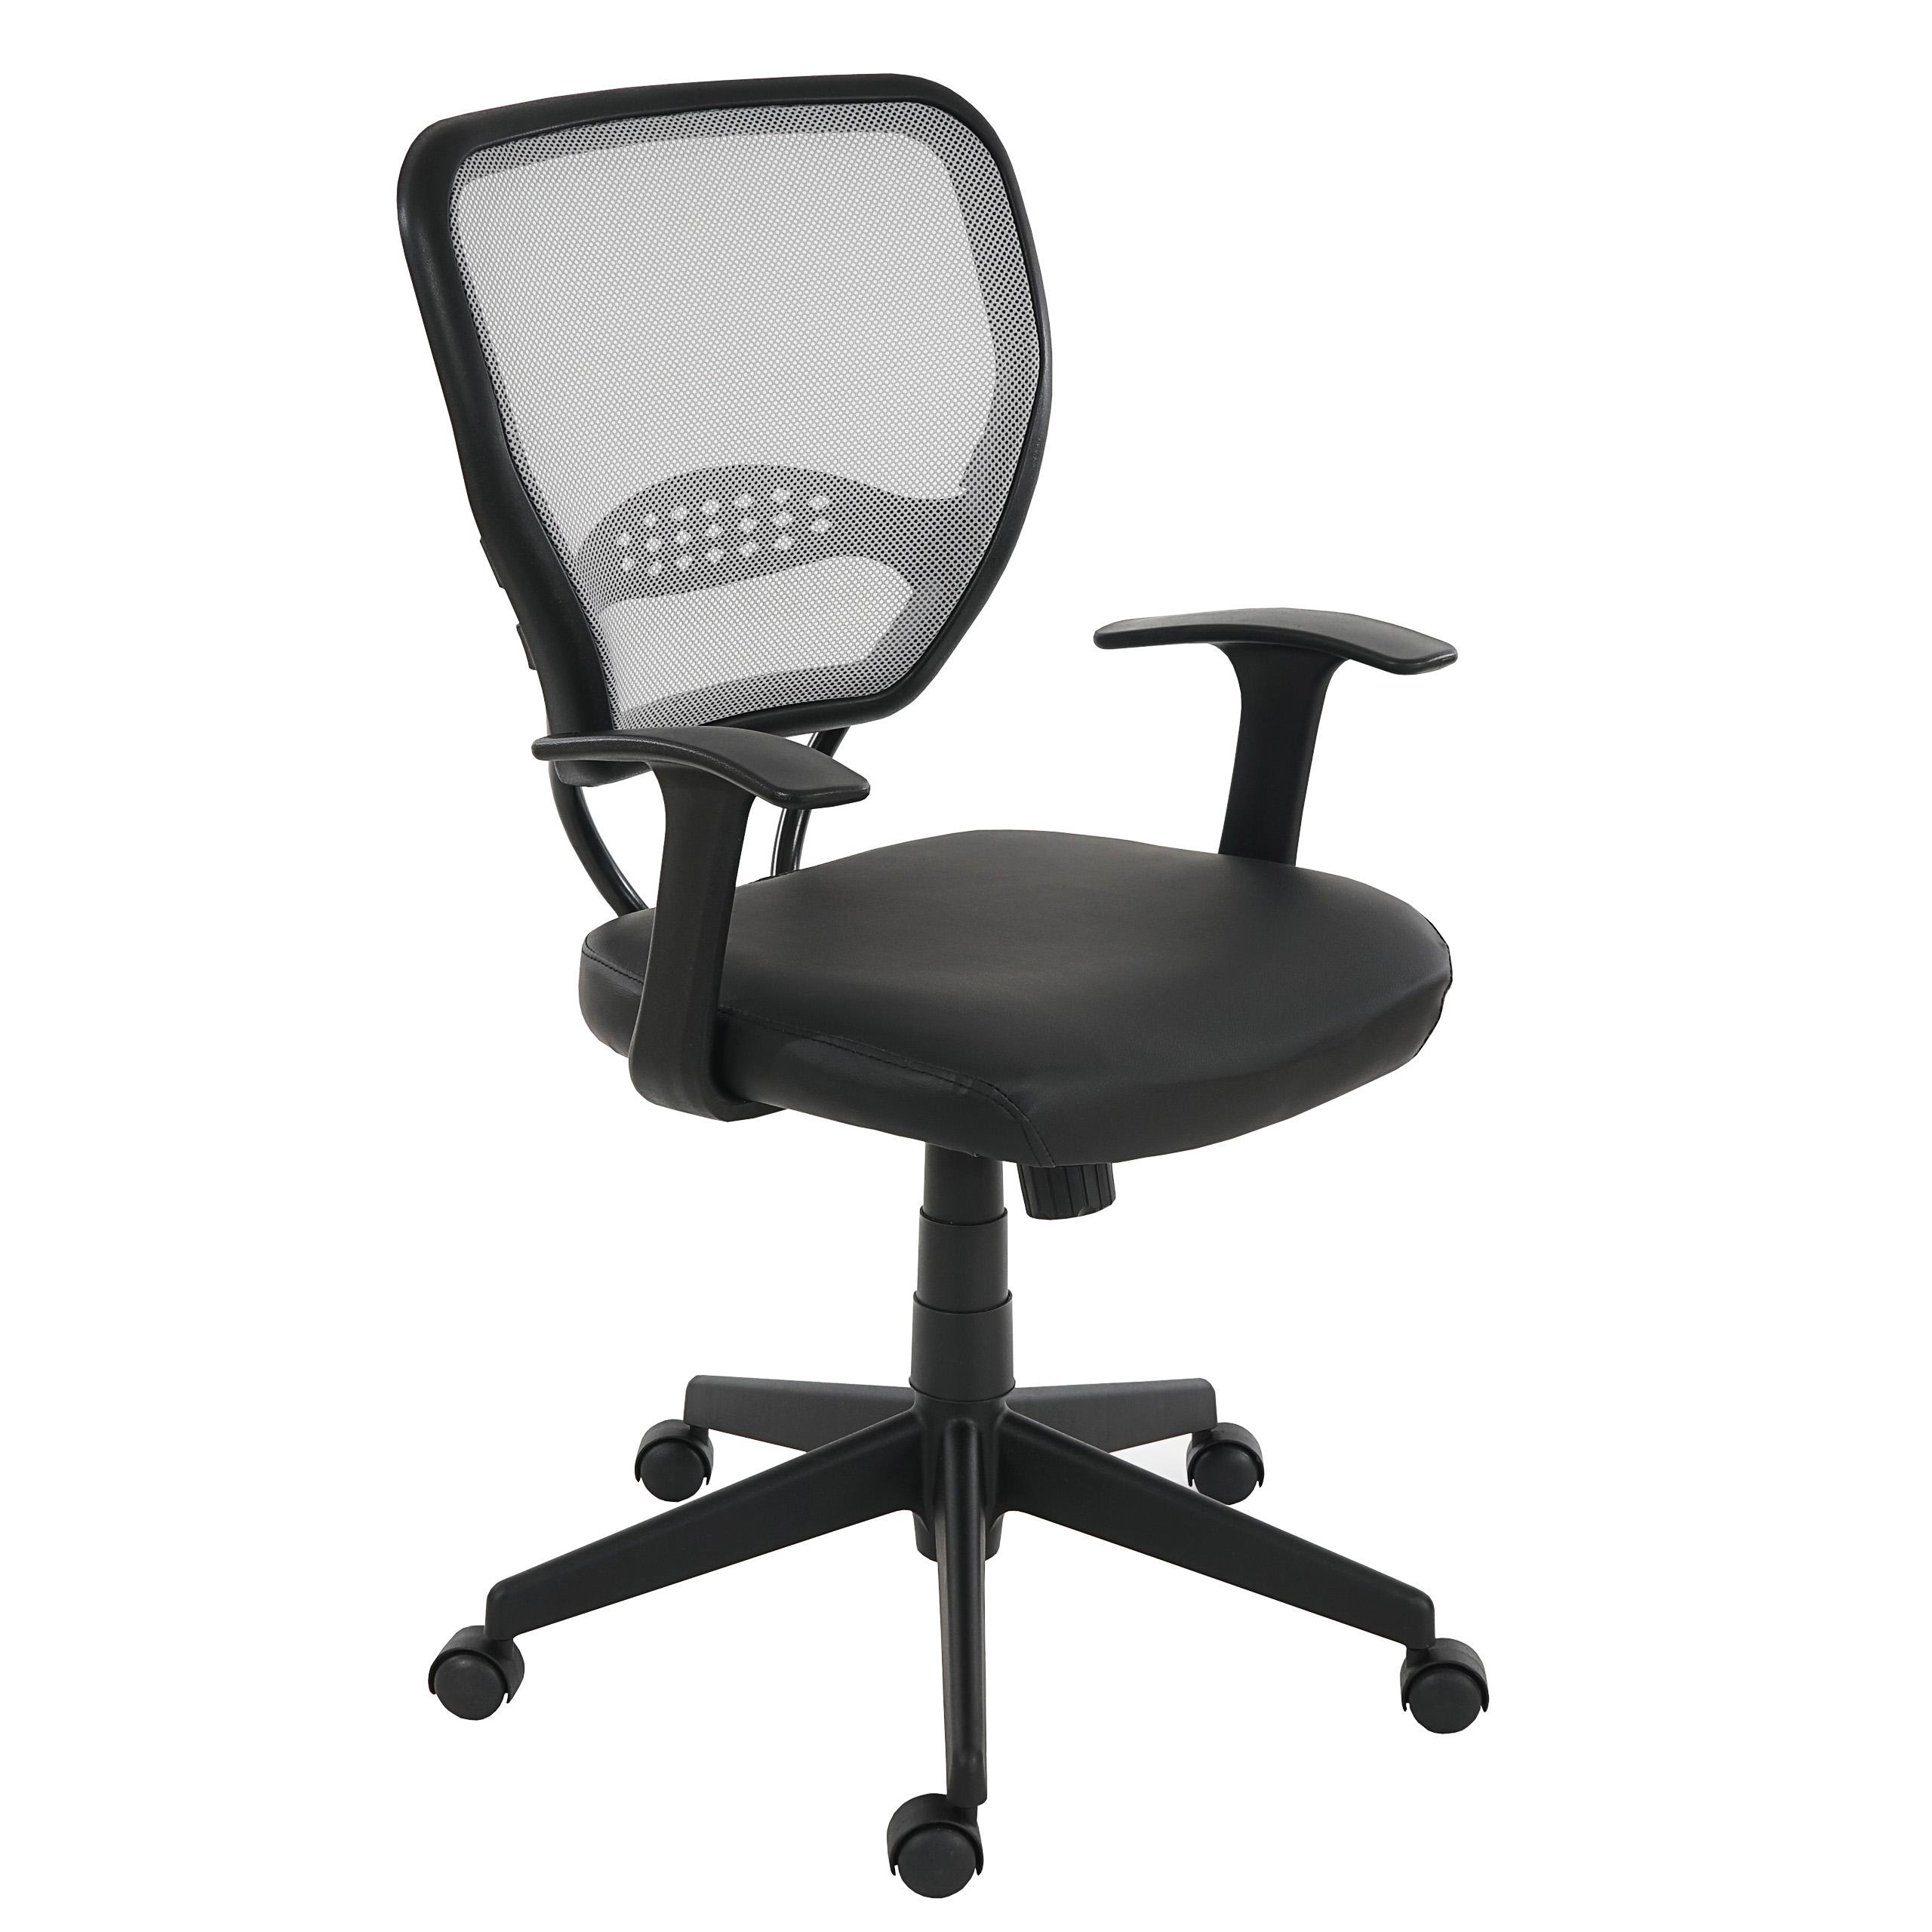 XXL-Bürostuhl TENOYA LEDER, bequeme Sitzpolsterung, Rückenlehne mit Netzbezug, Farbe Grau